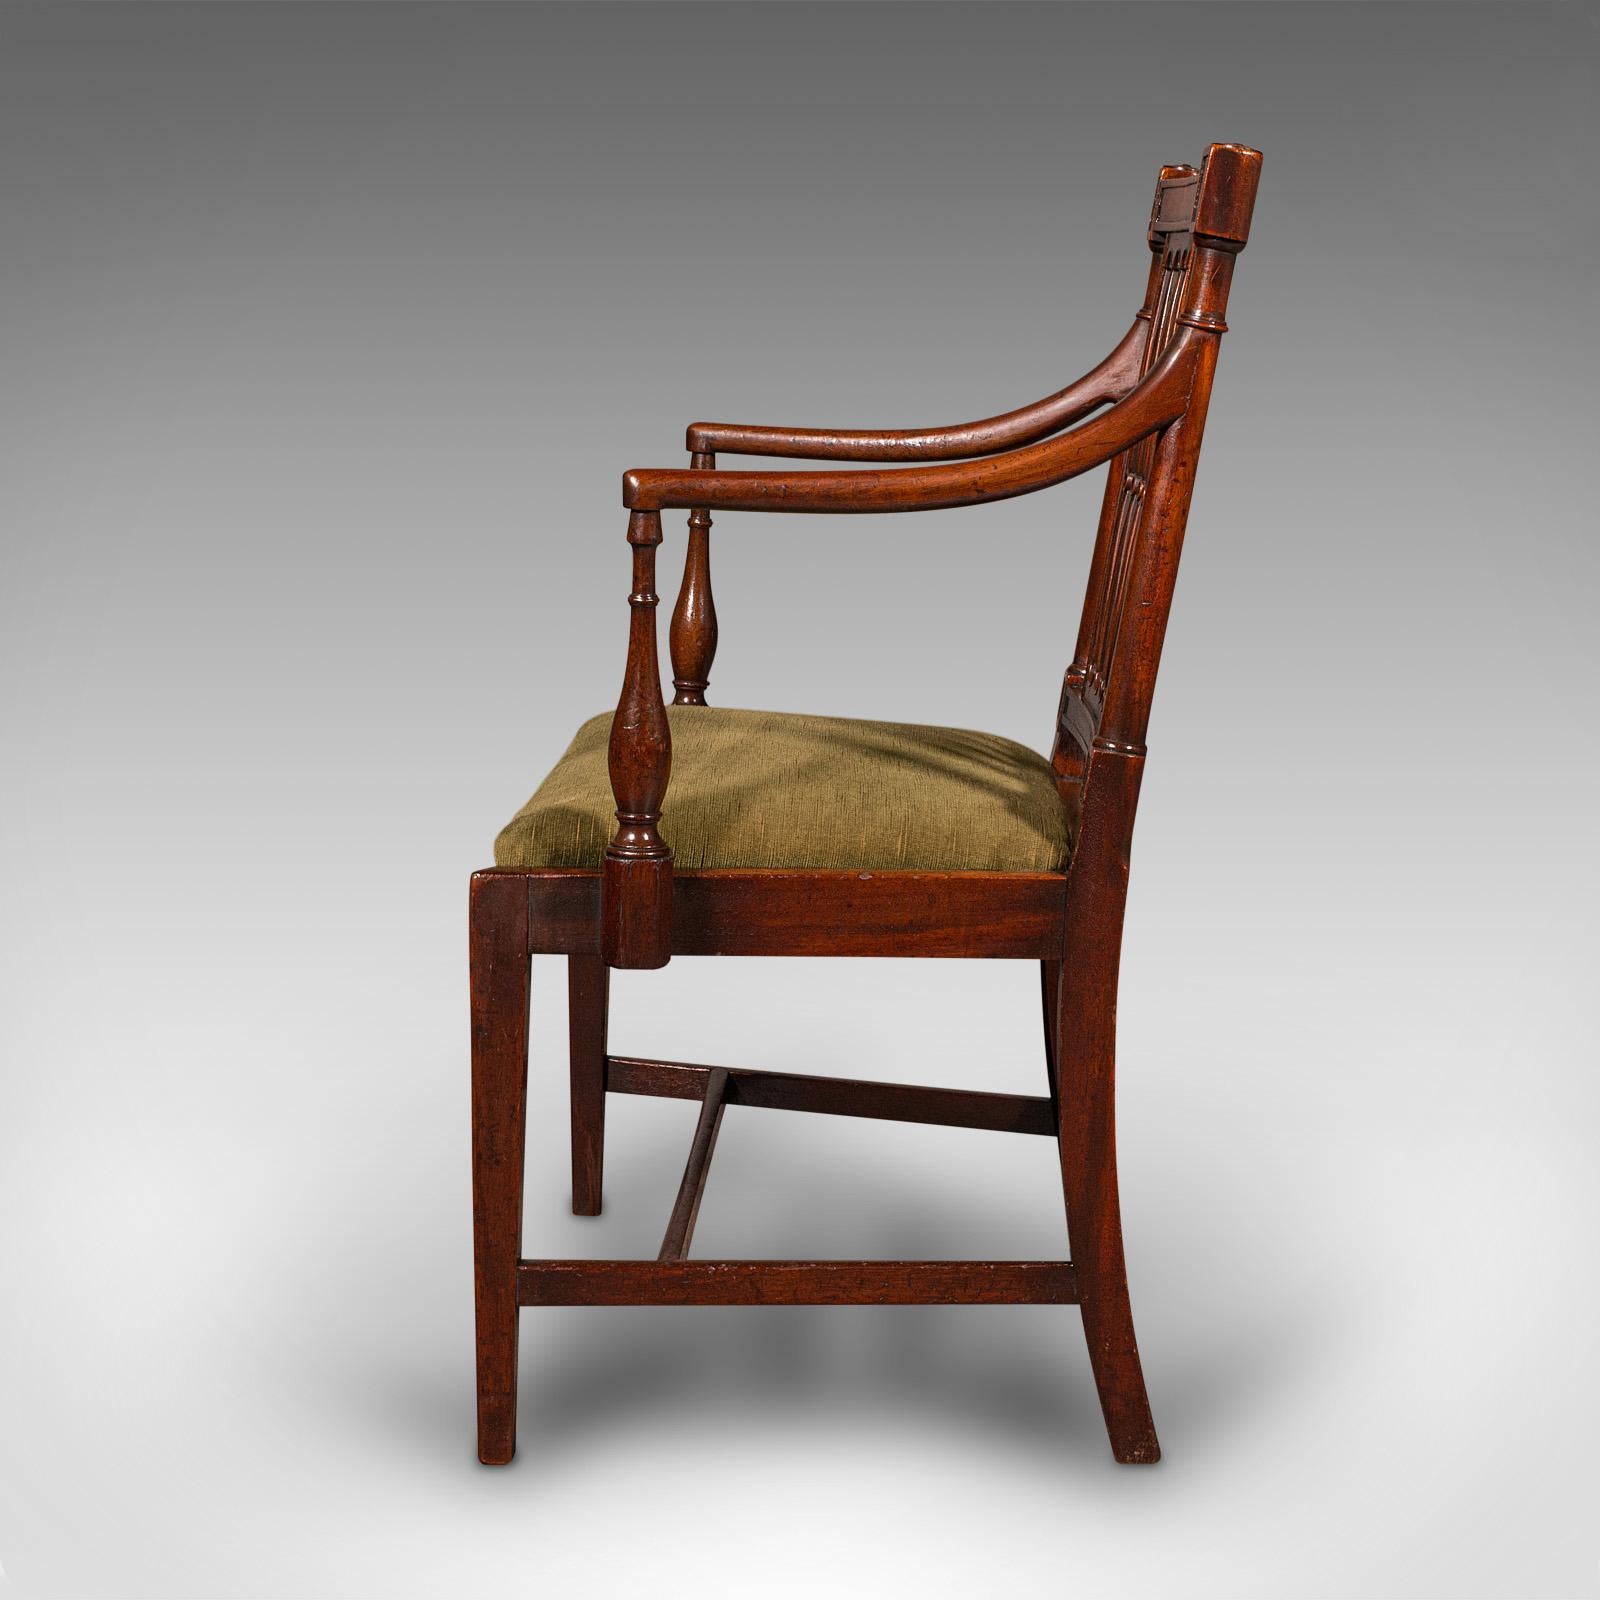 British Antique Elbow Chair, English, Carver Seat, After Sheraton, Georgian, Circa 1780